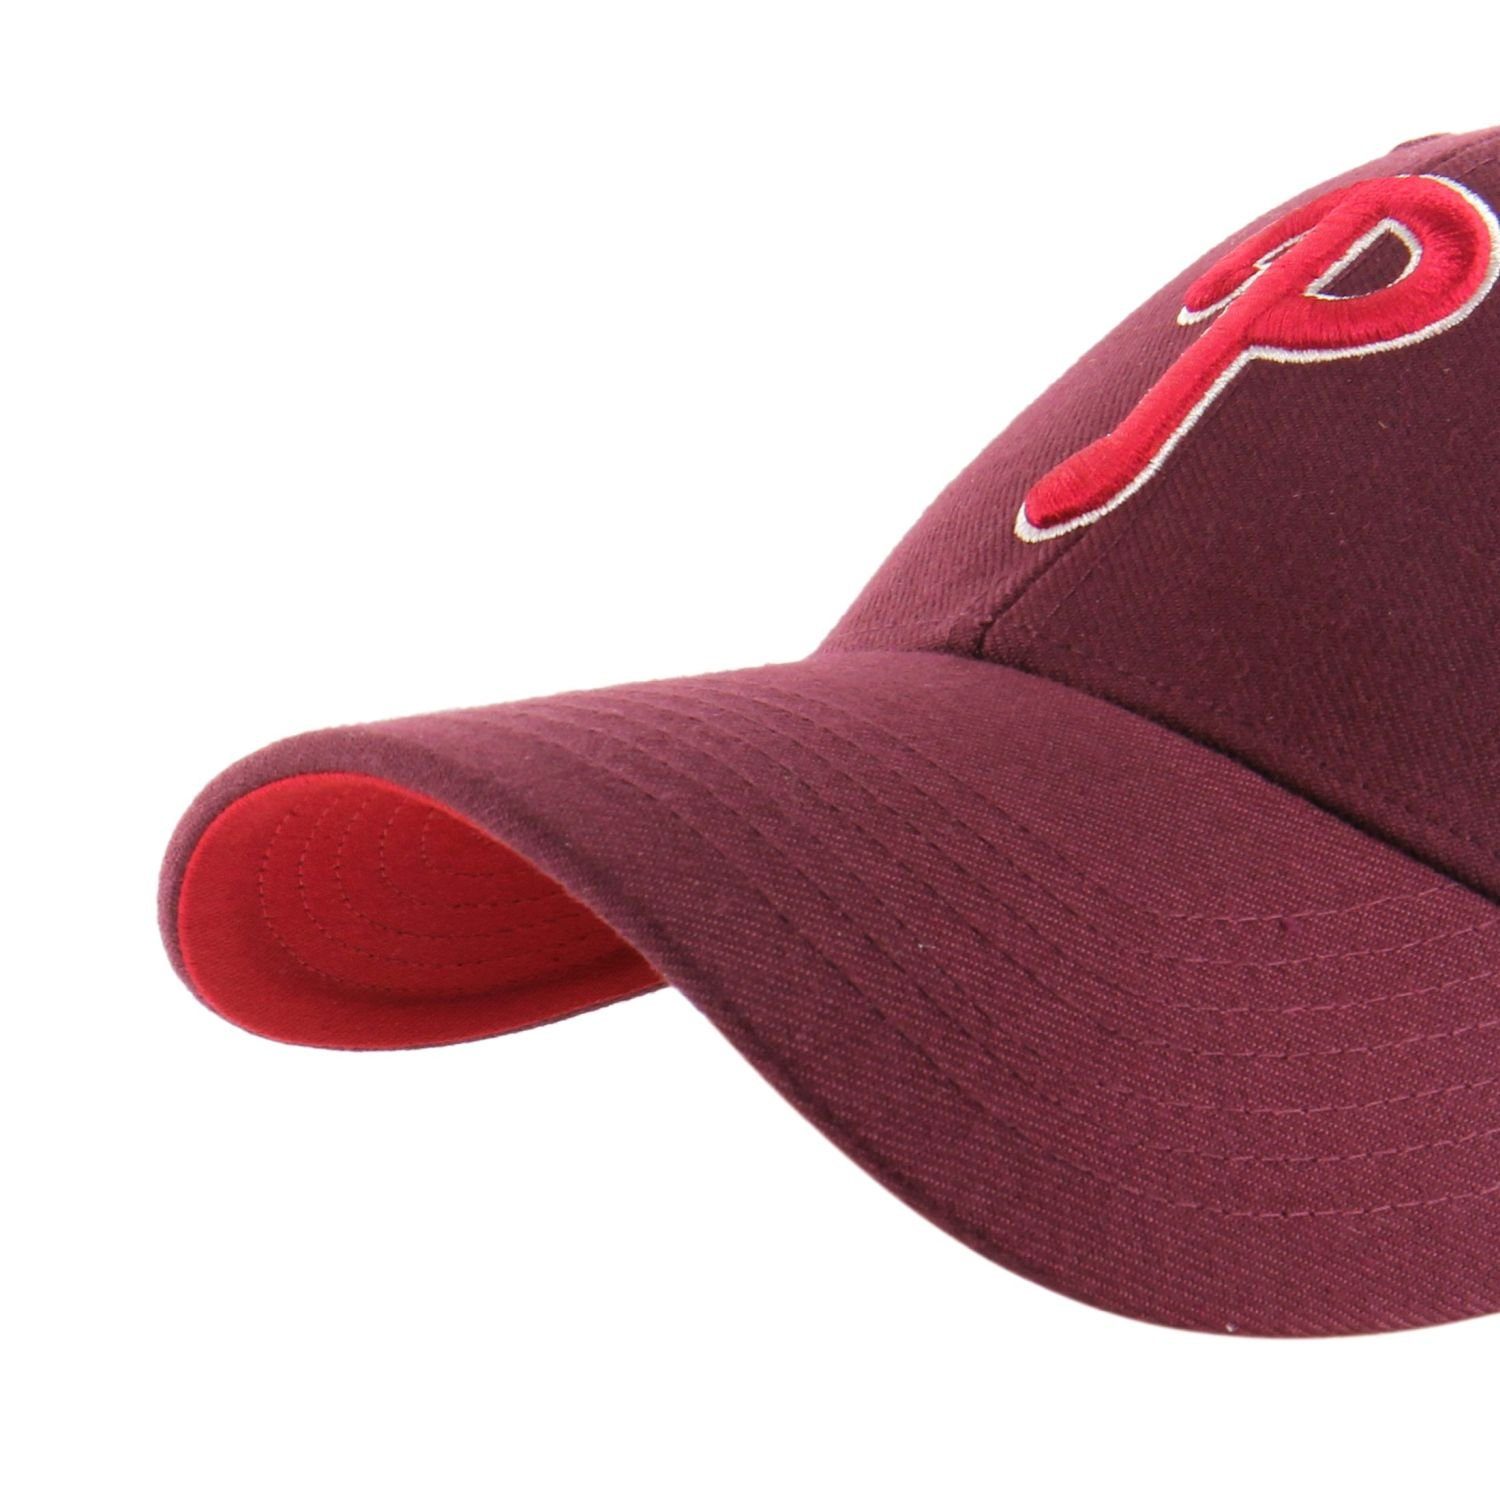 Philadelphia Brand Cap SURE SHOT '47 Baseball Phillies